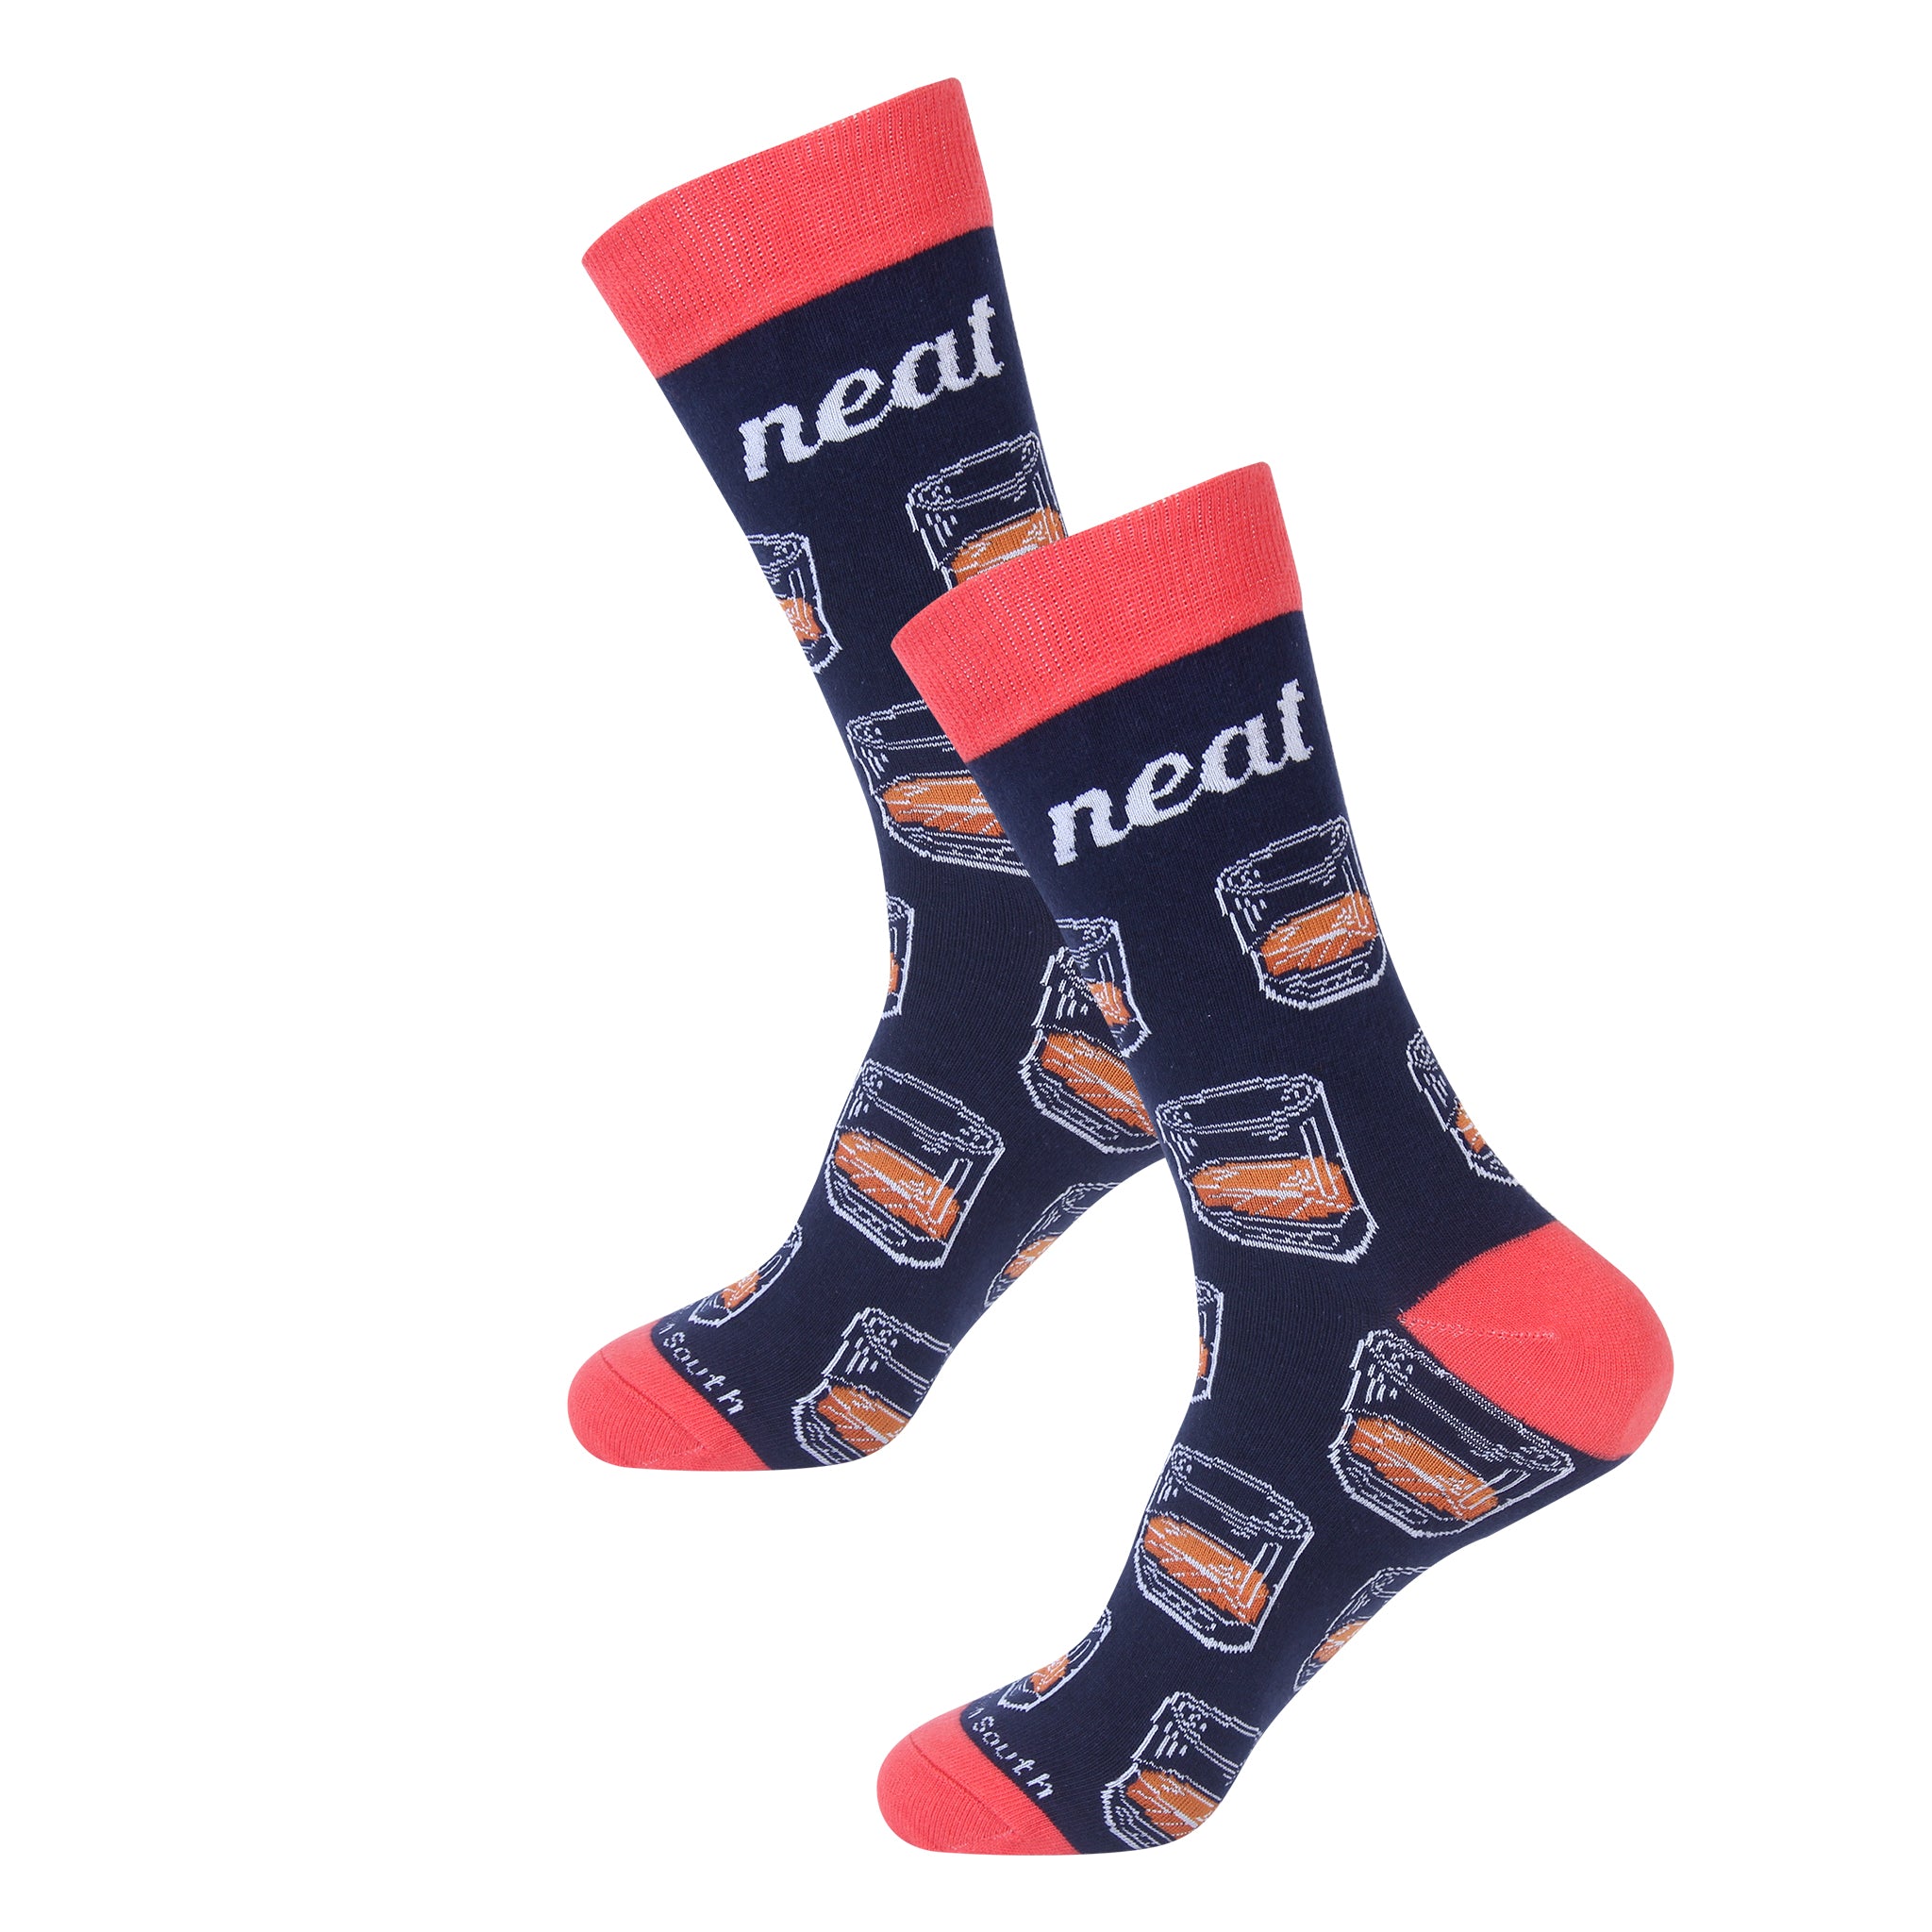 Neat Socks